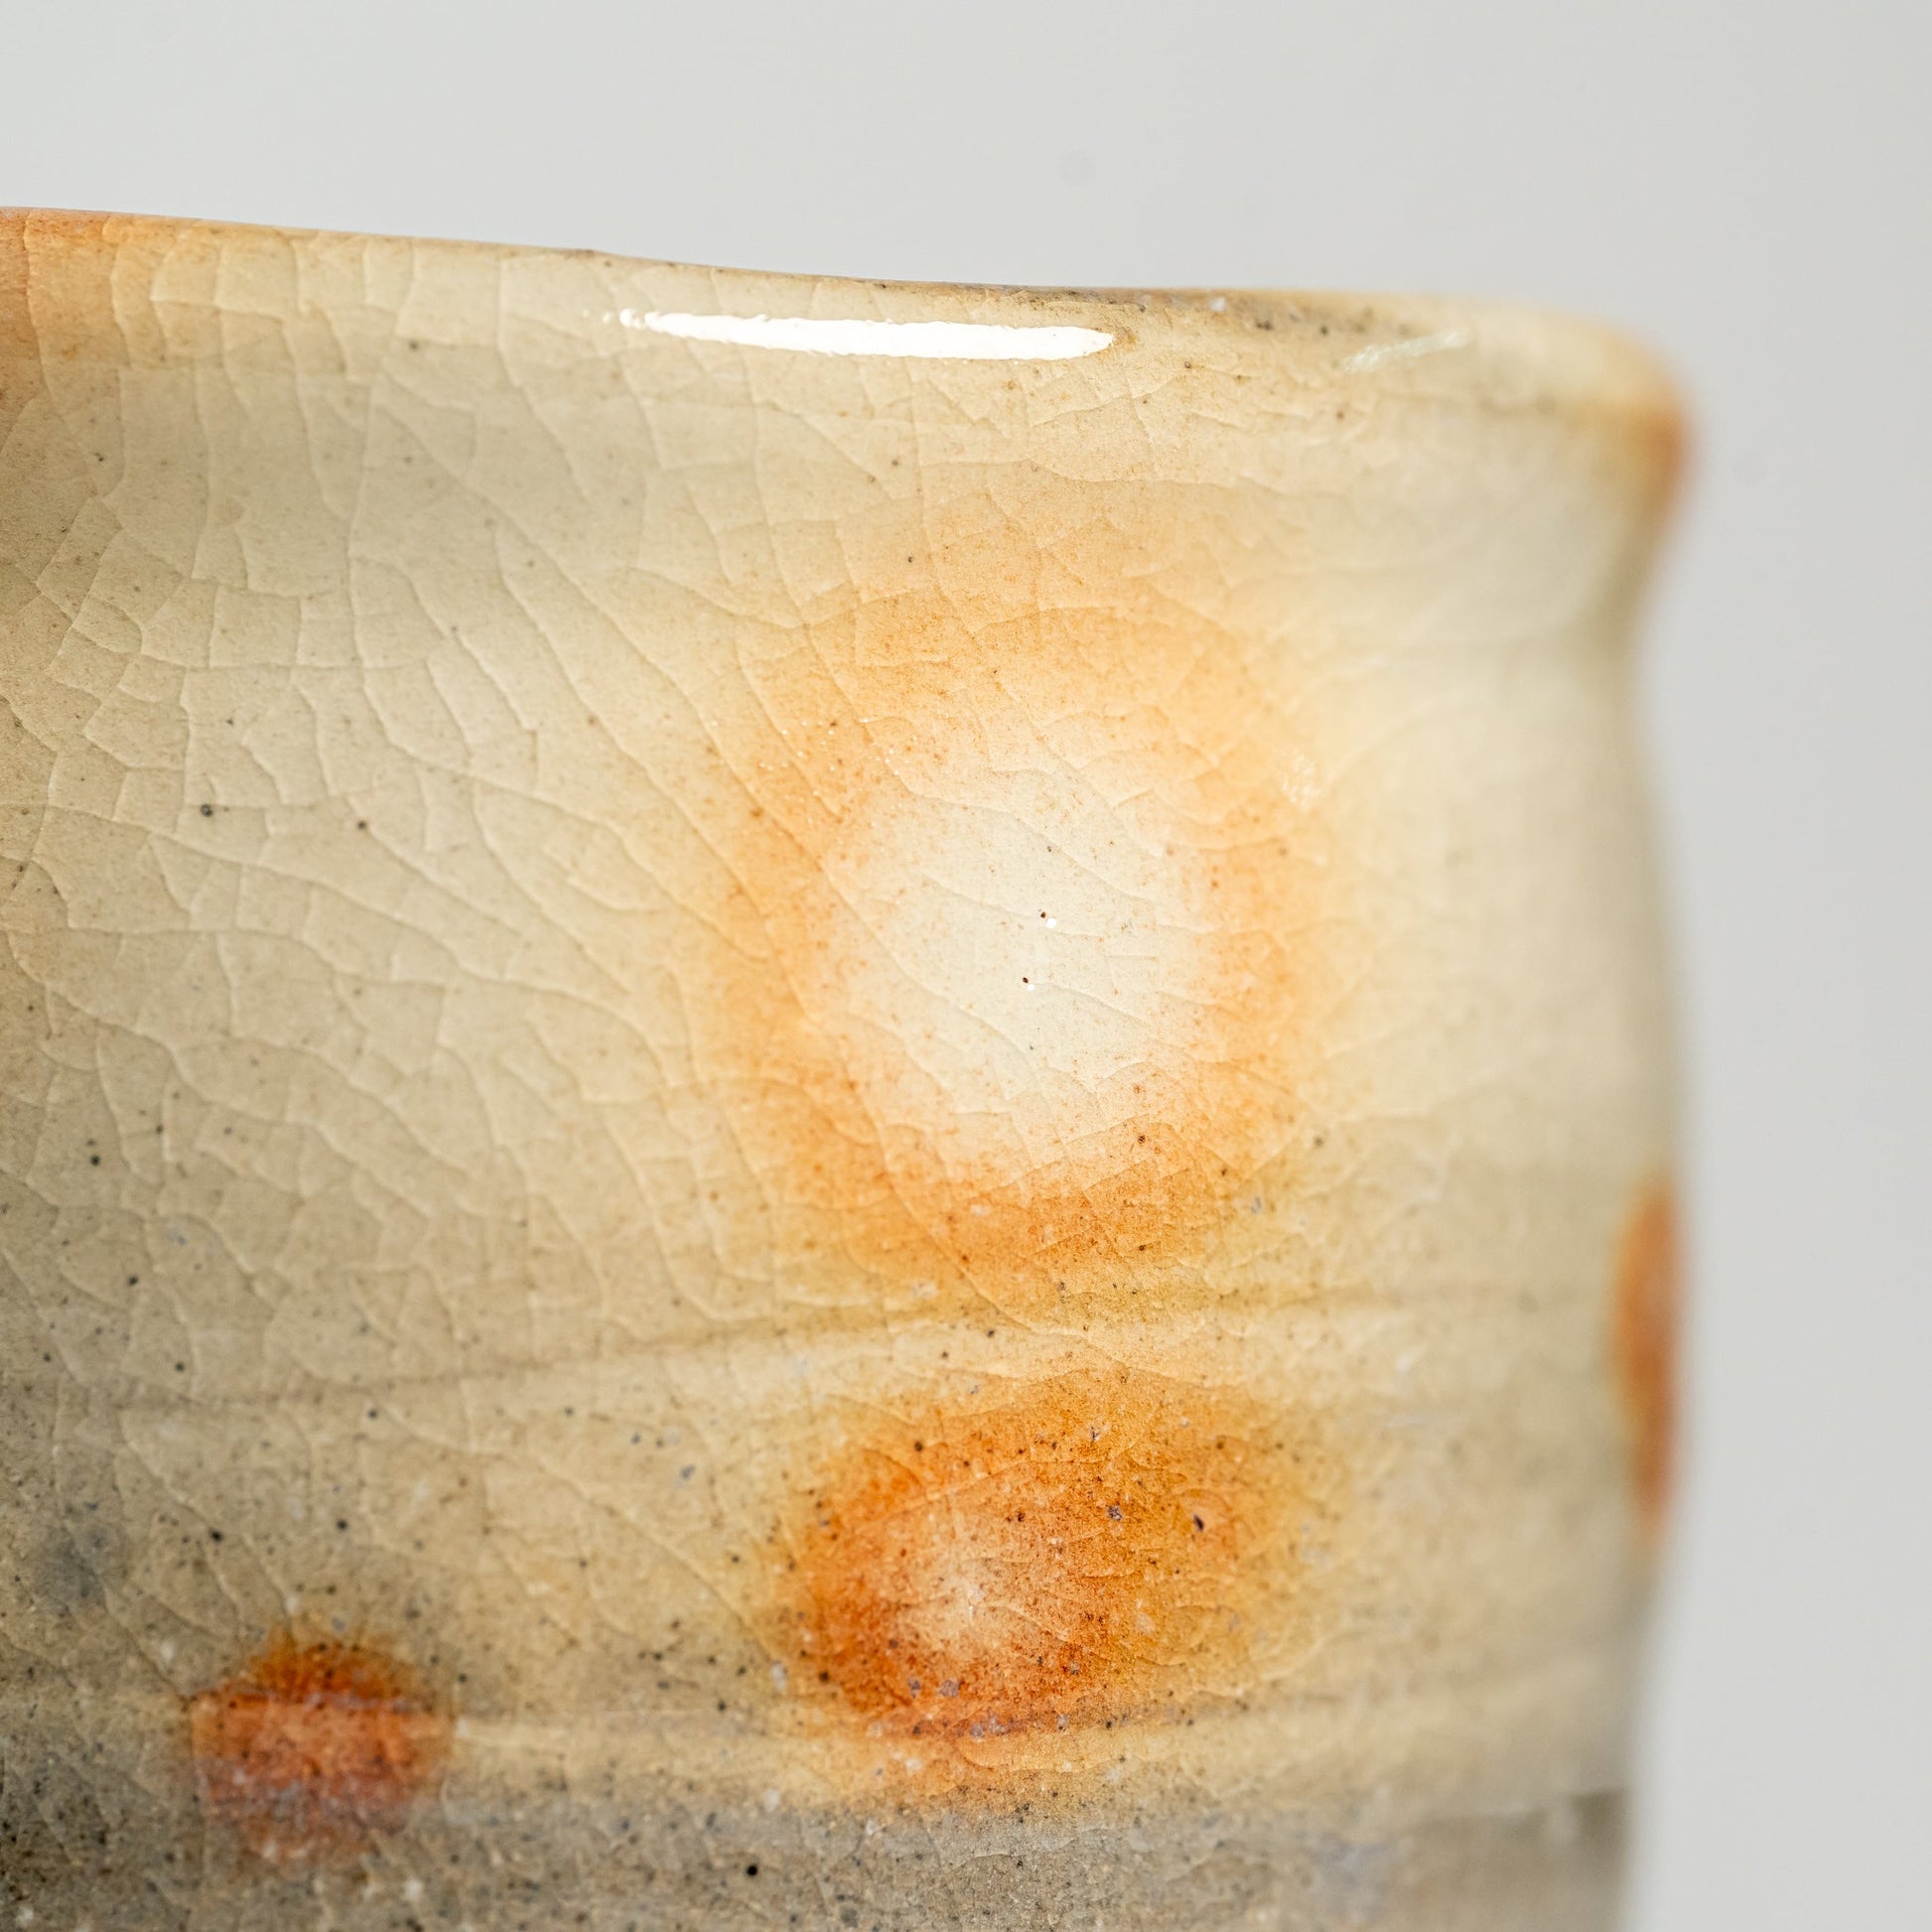 A close up of a kesho Hagi yaki teacup on a white background